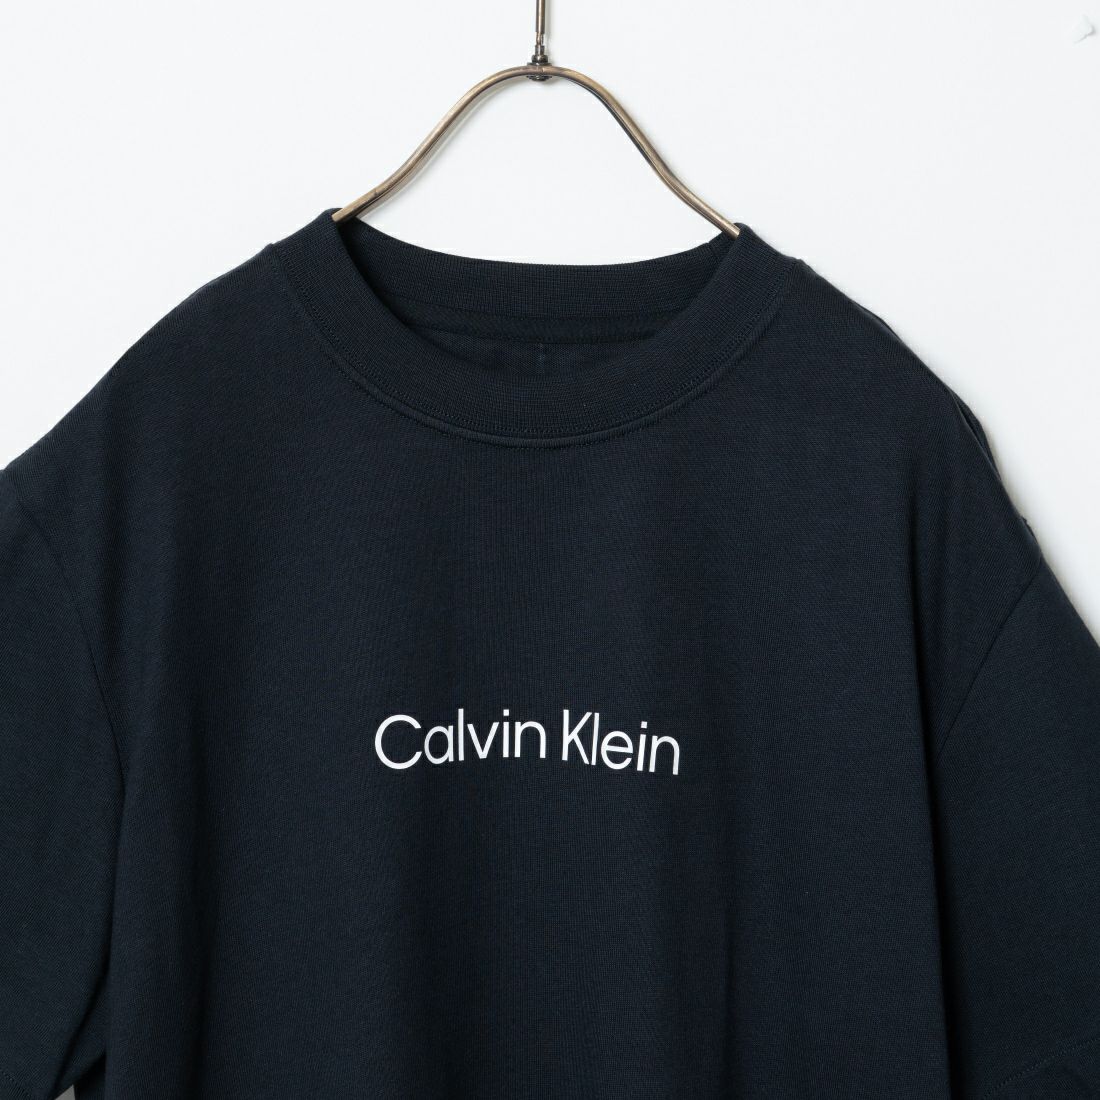 Calvin Klein [カルバンクライン] ロゴプリントボクシーTシャツ [40WH113] BAE